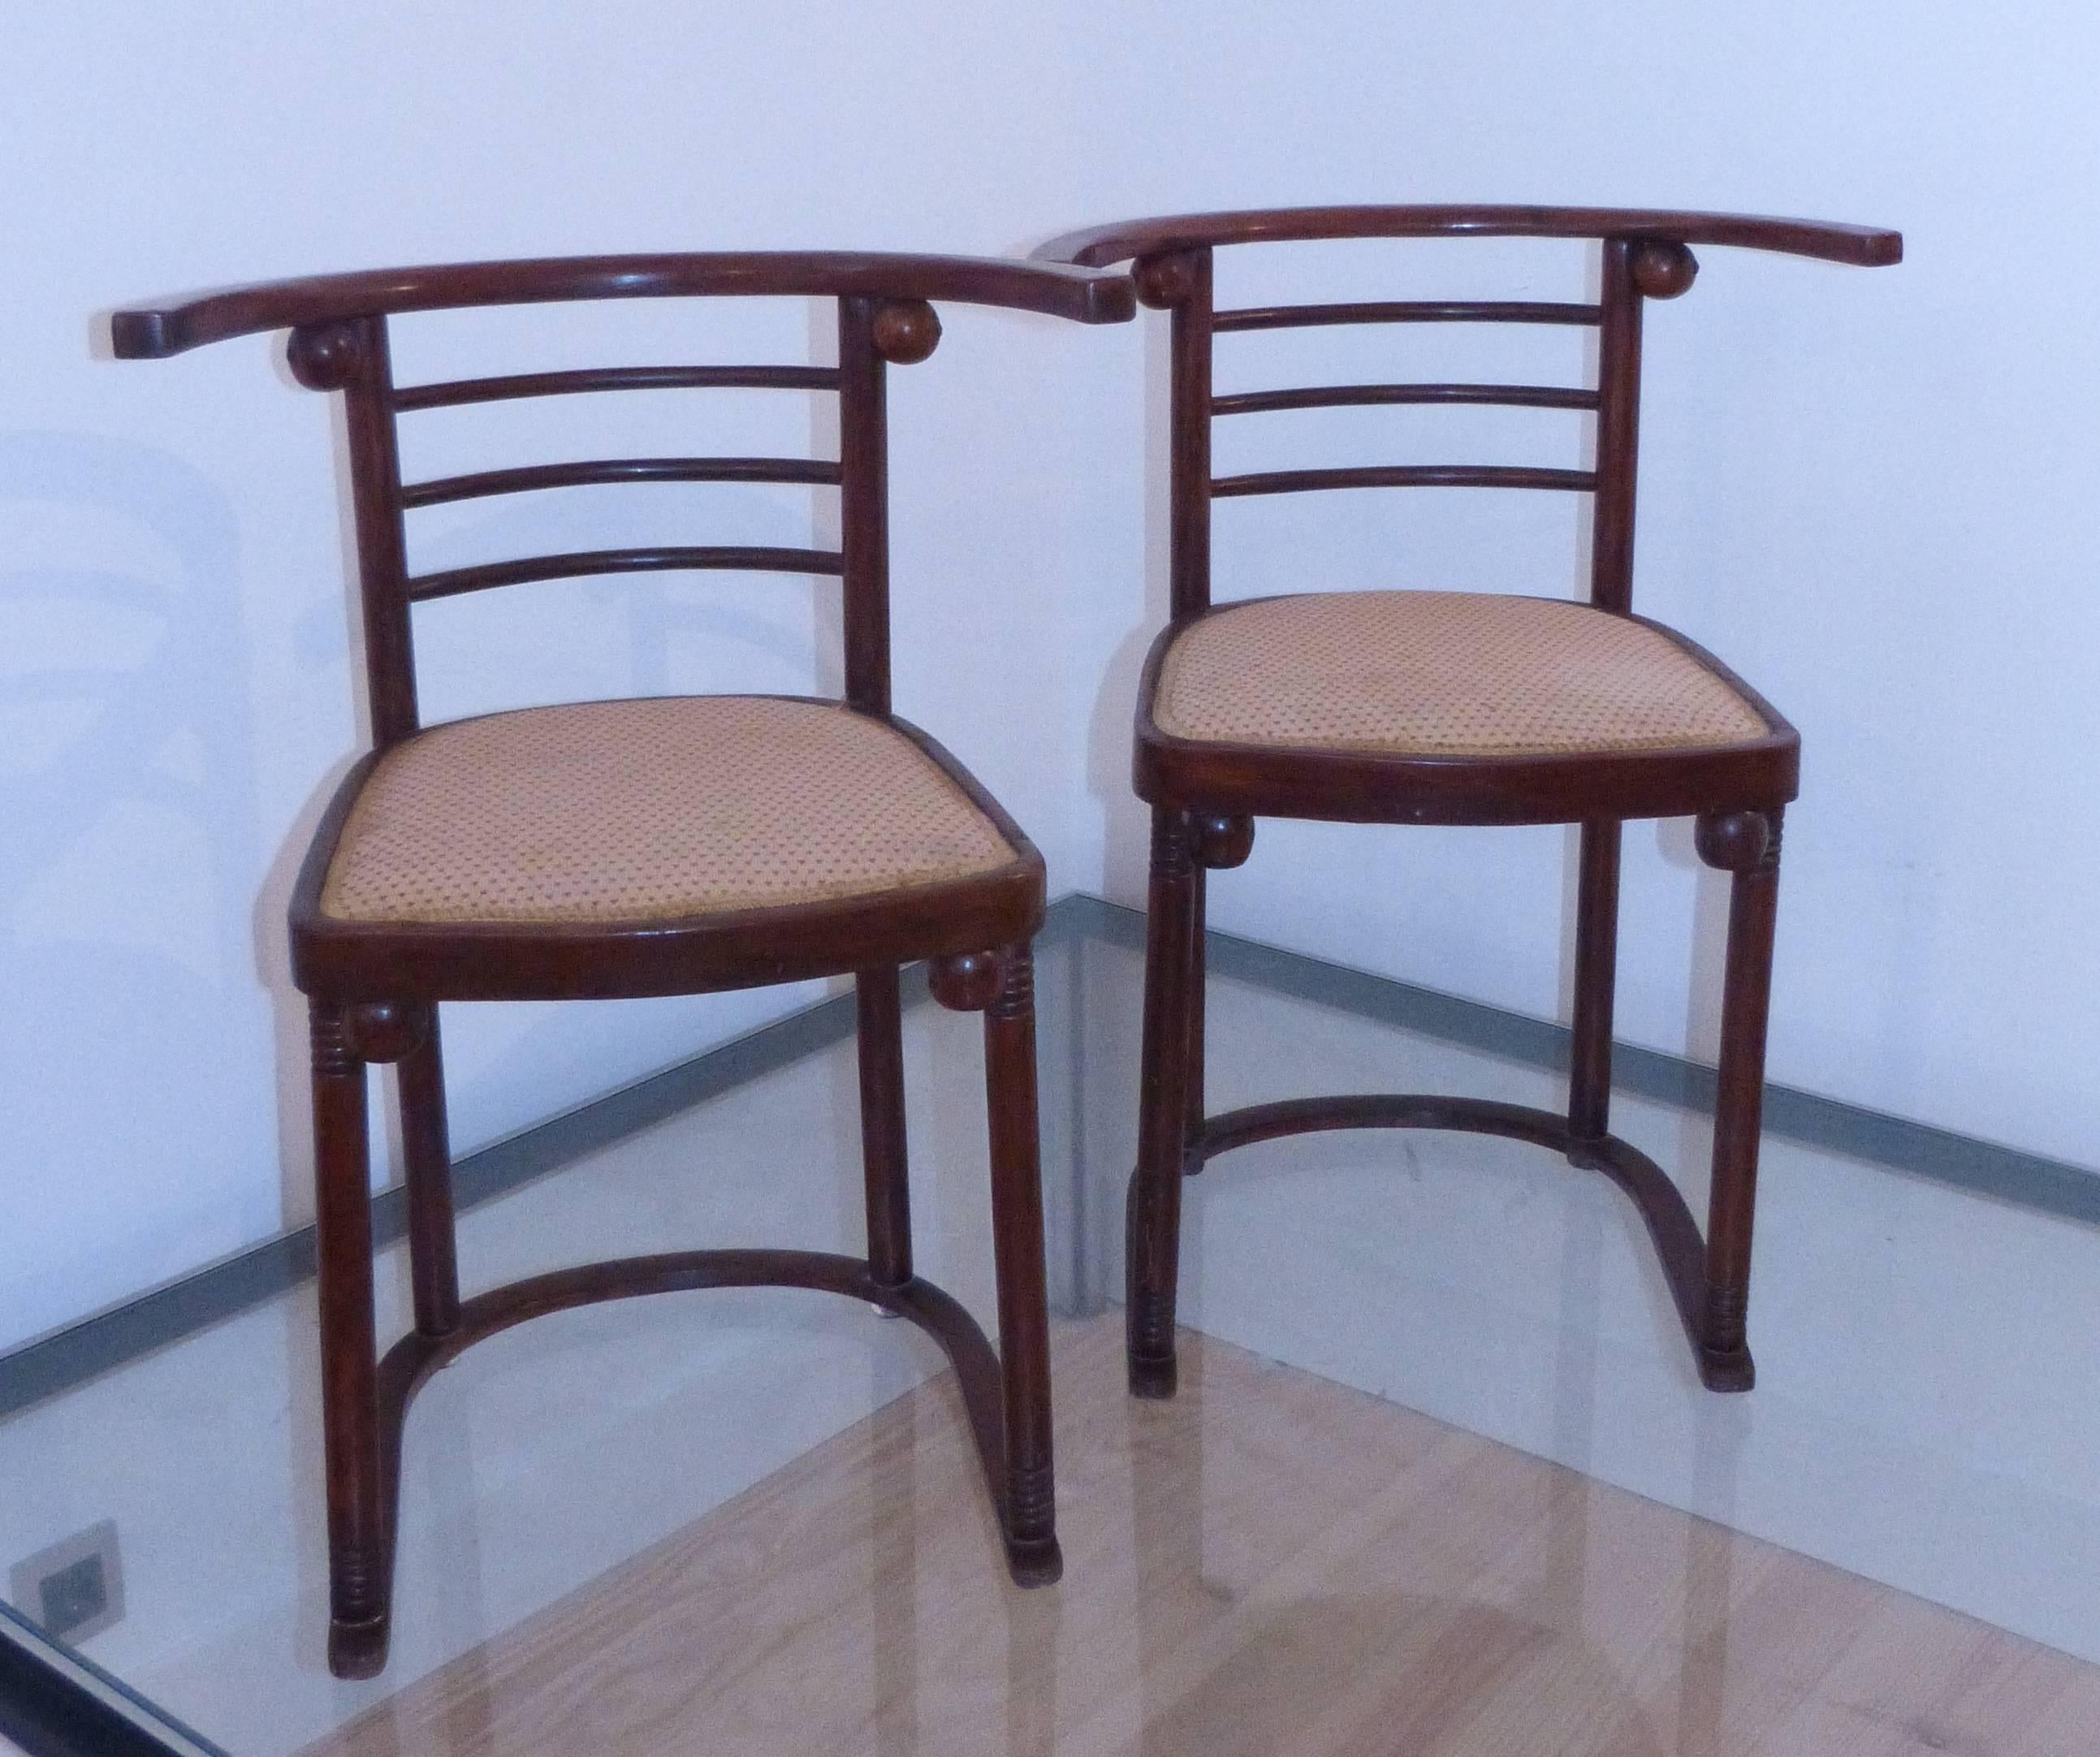 20th Century Set of Three Fledermauss Chairs by Josef Hoffmann 1905